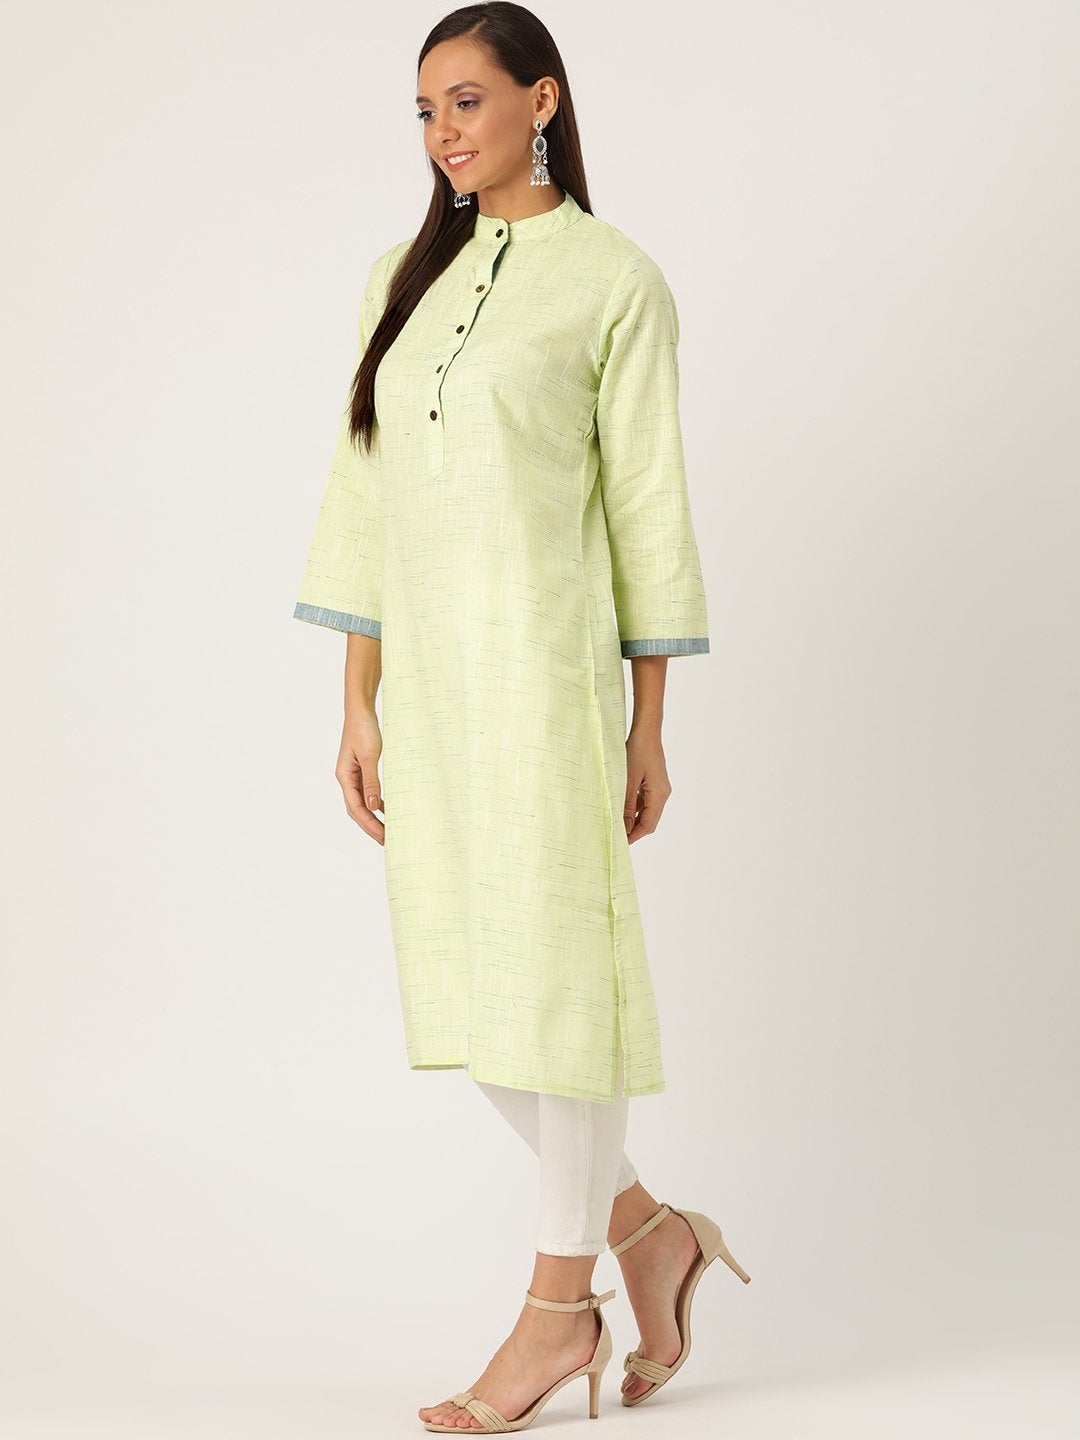 Women's Handloom Cotton Kurta In Green - InWeave